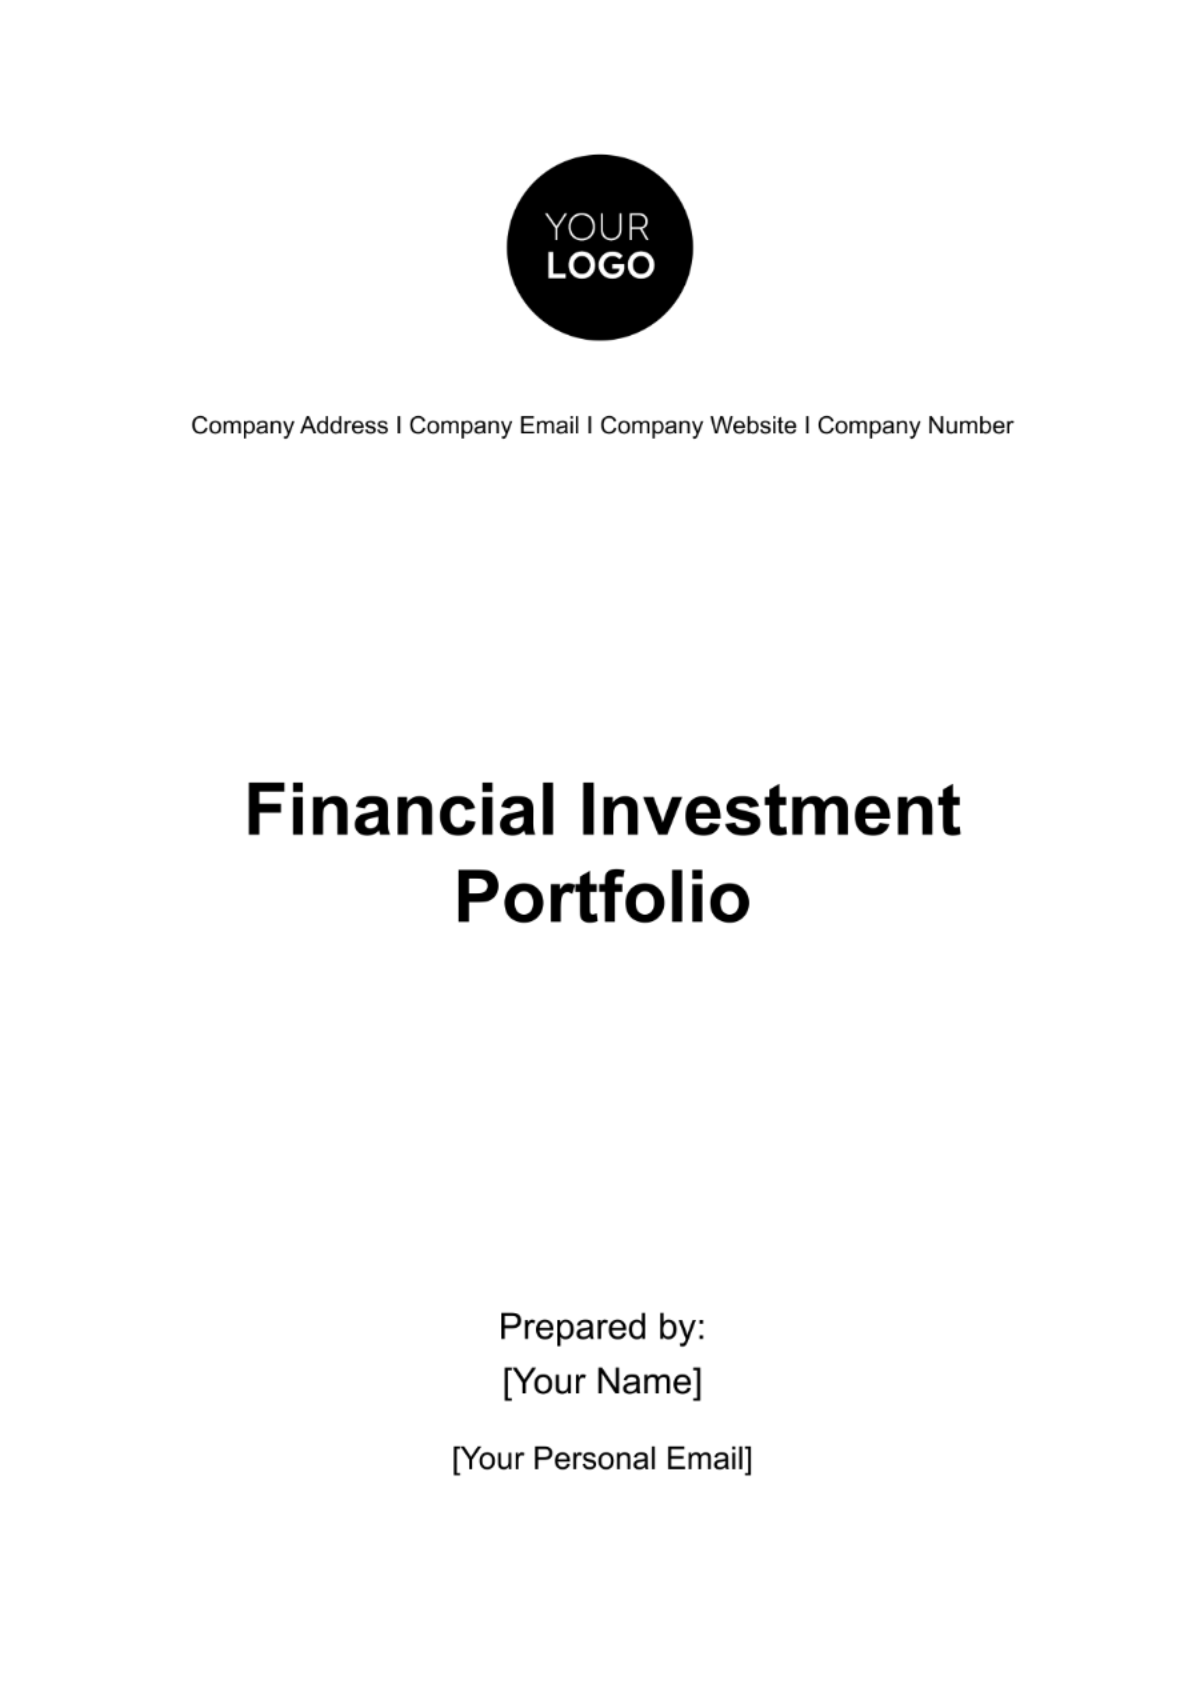 Financial Investment Portfolio Template